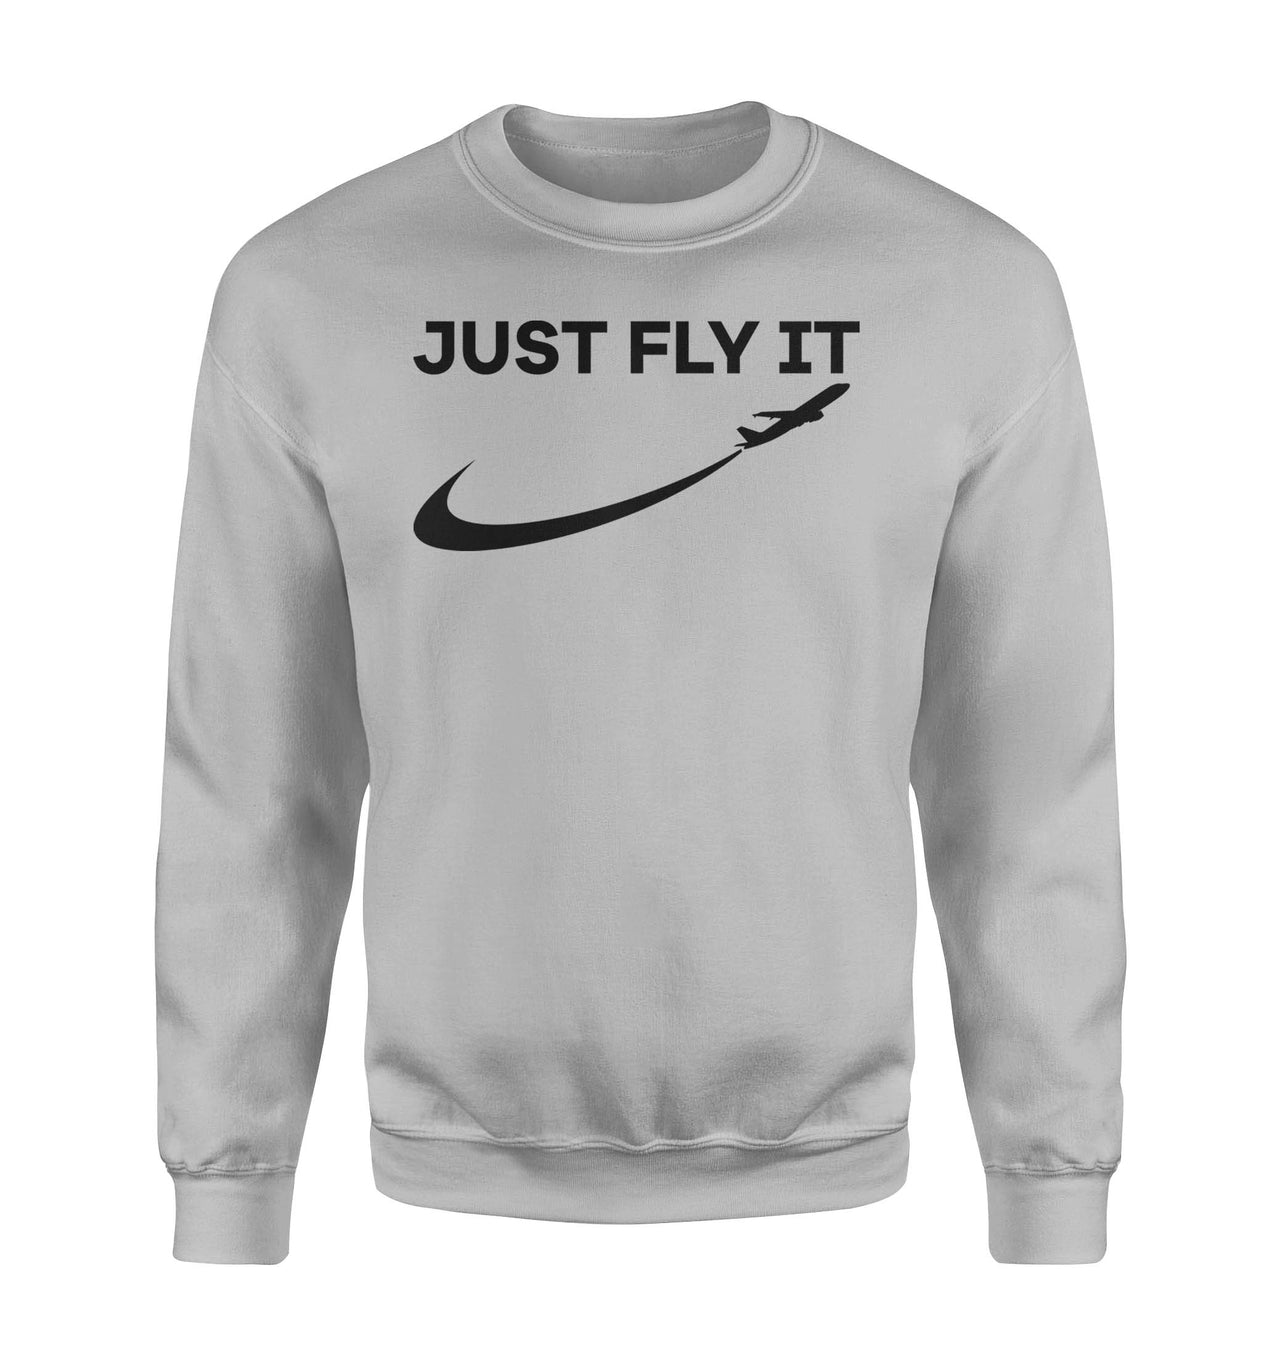 Just Fly It 2 Designed Sweatshirts